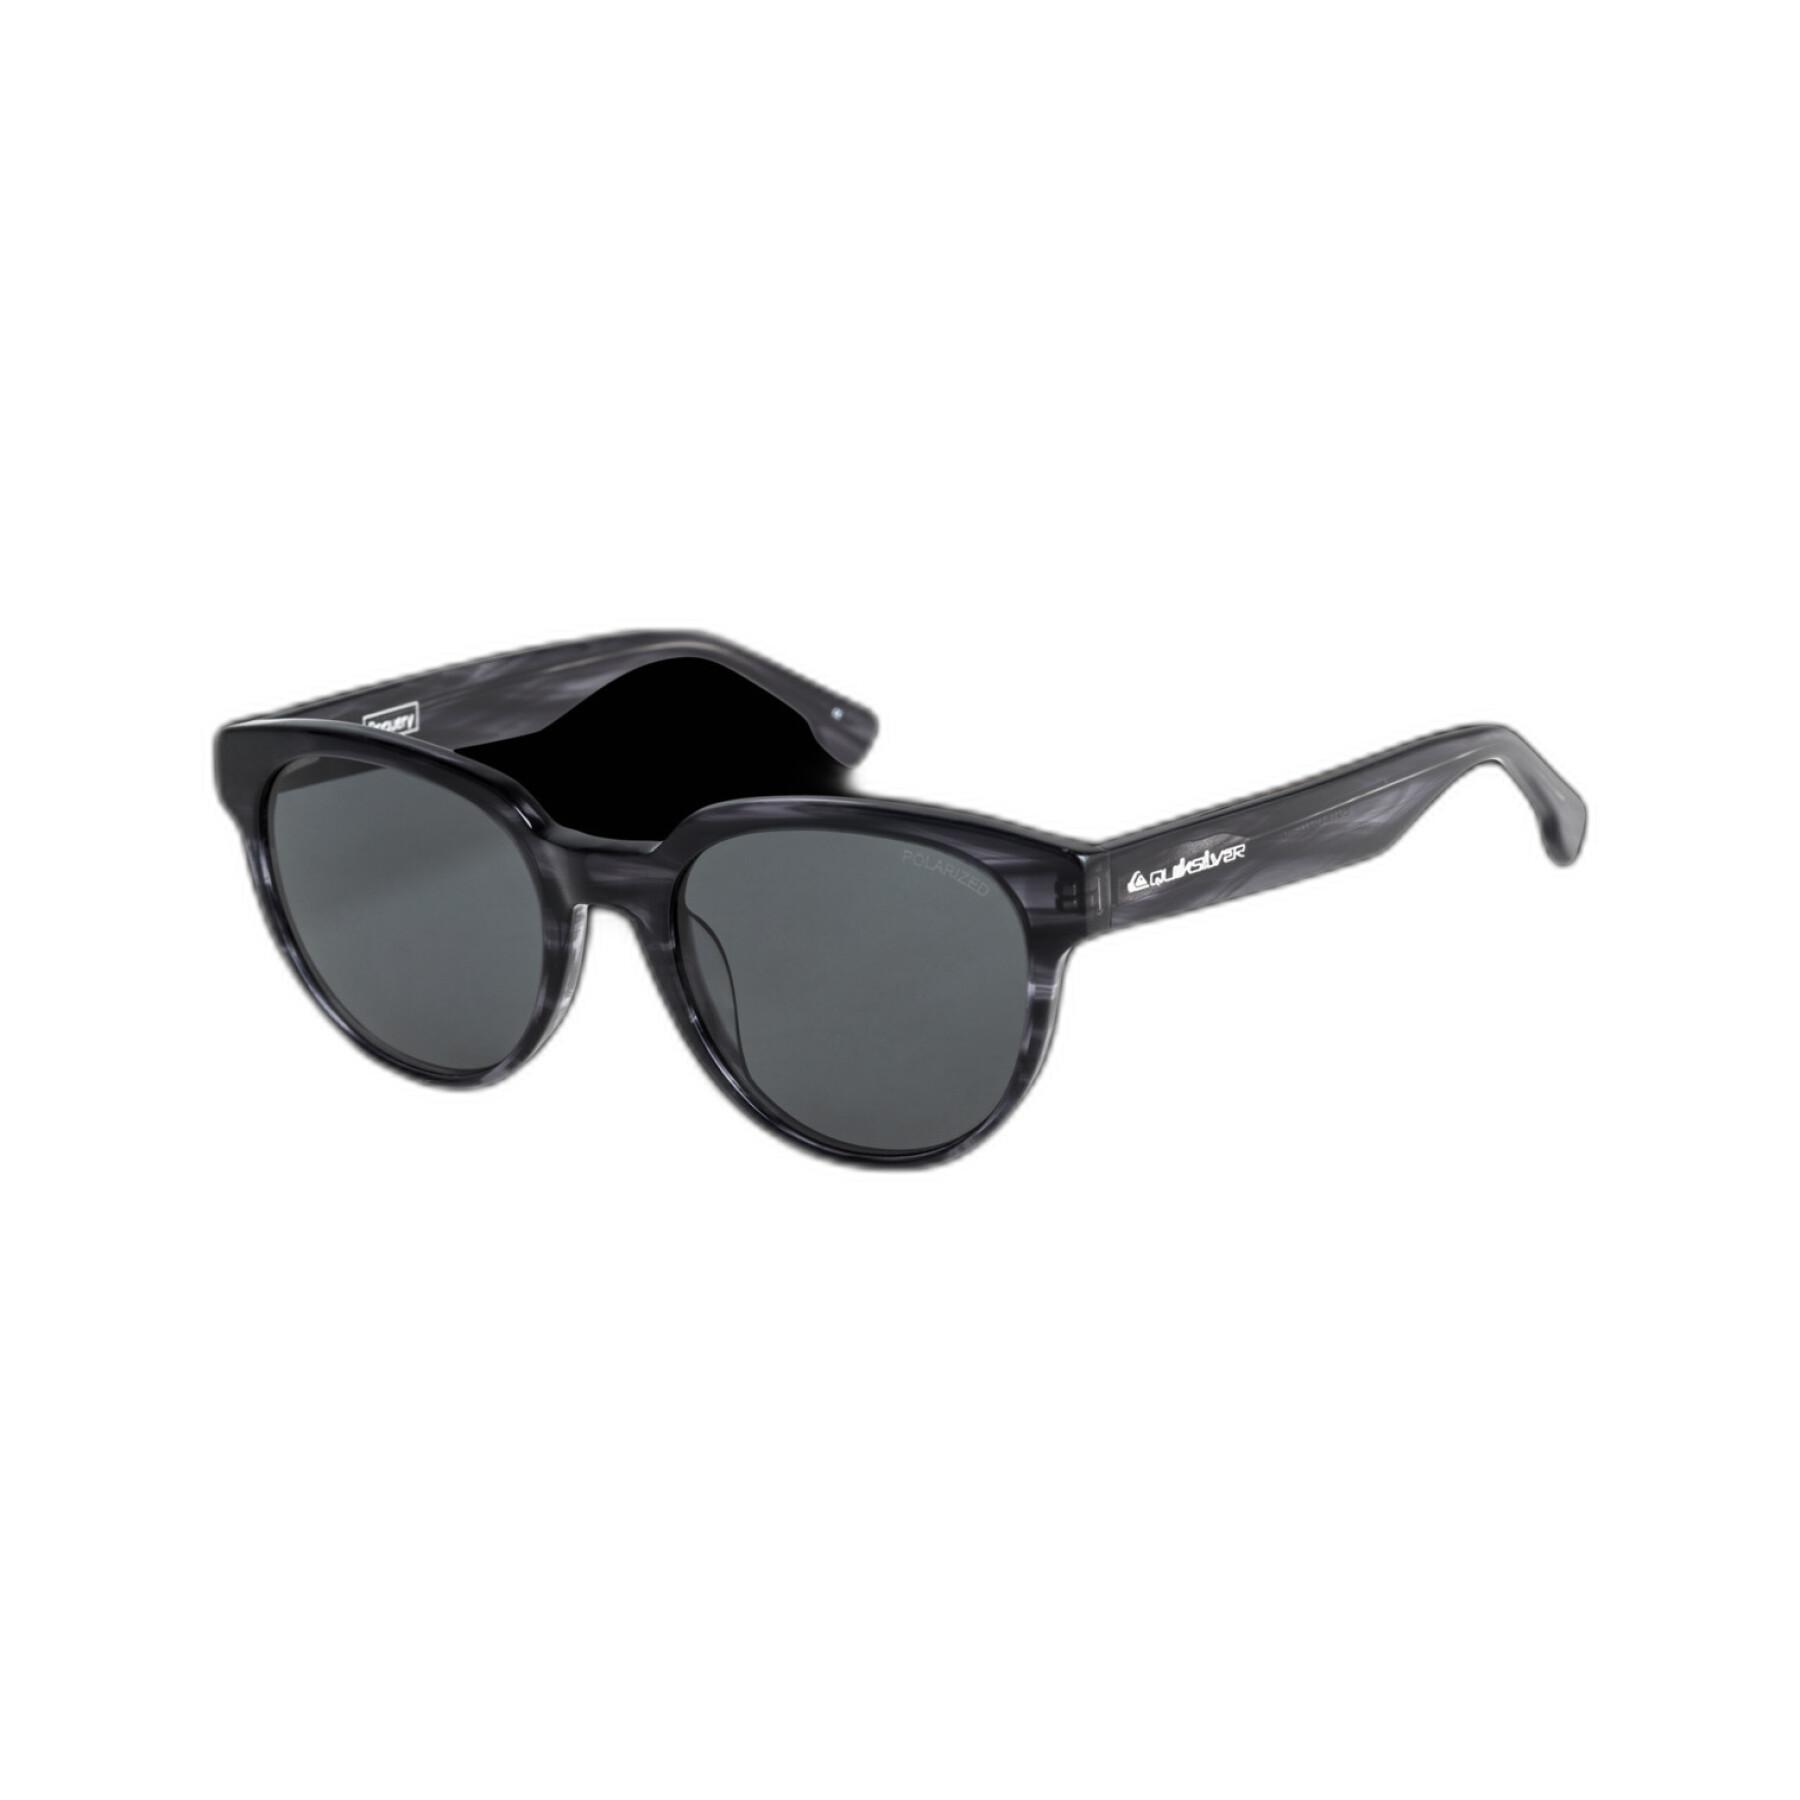 Polarized sunglasses Quiksilver Roguery - Sunglasses - Fashion Accessories  - Accessories